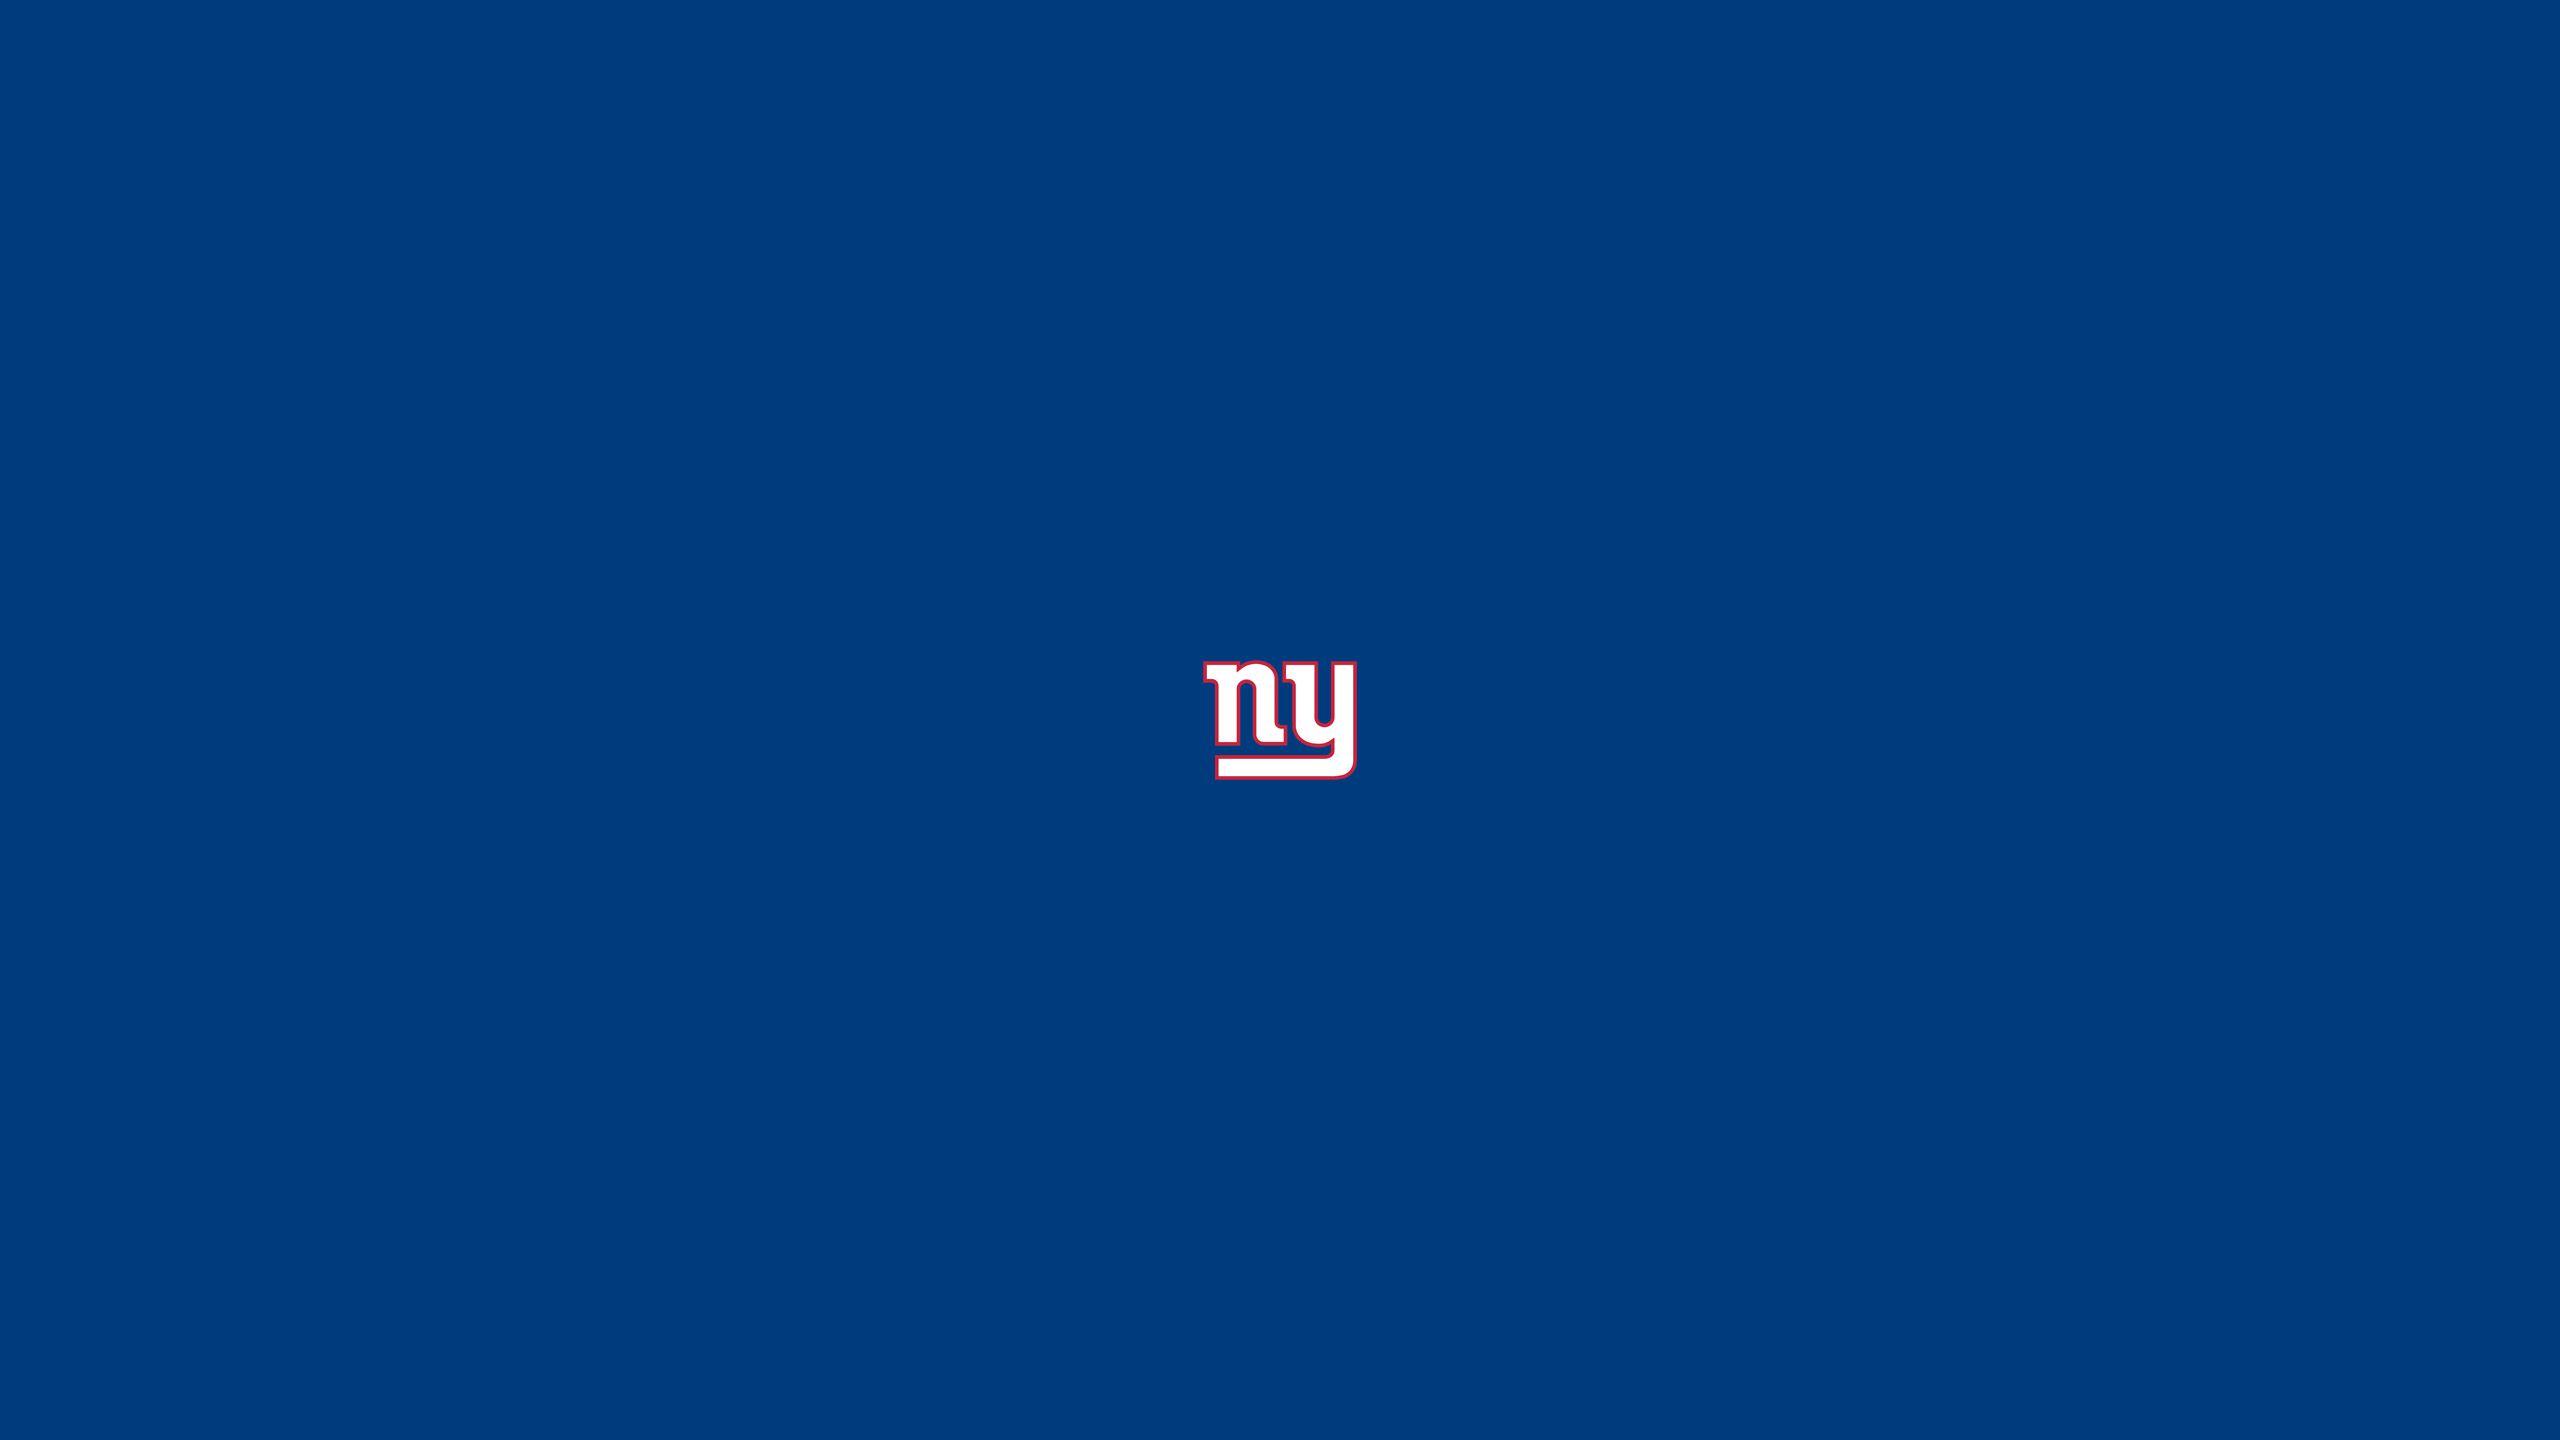 New York Giants Logo Wallpaper Background 55988 2560x1440 px